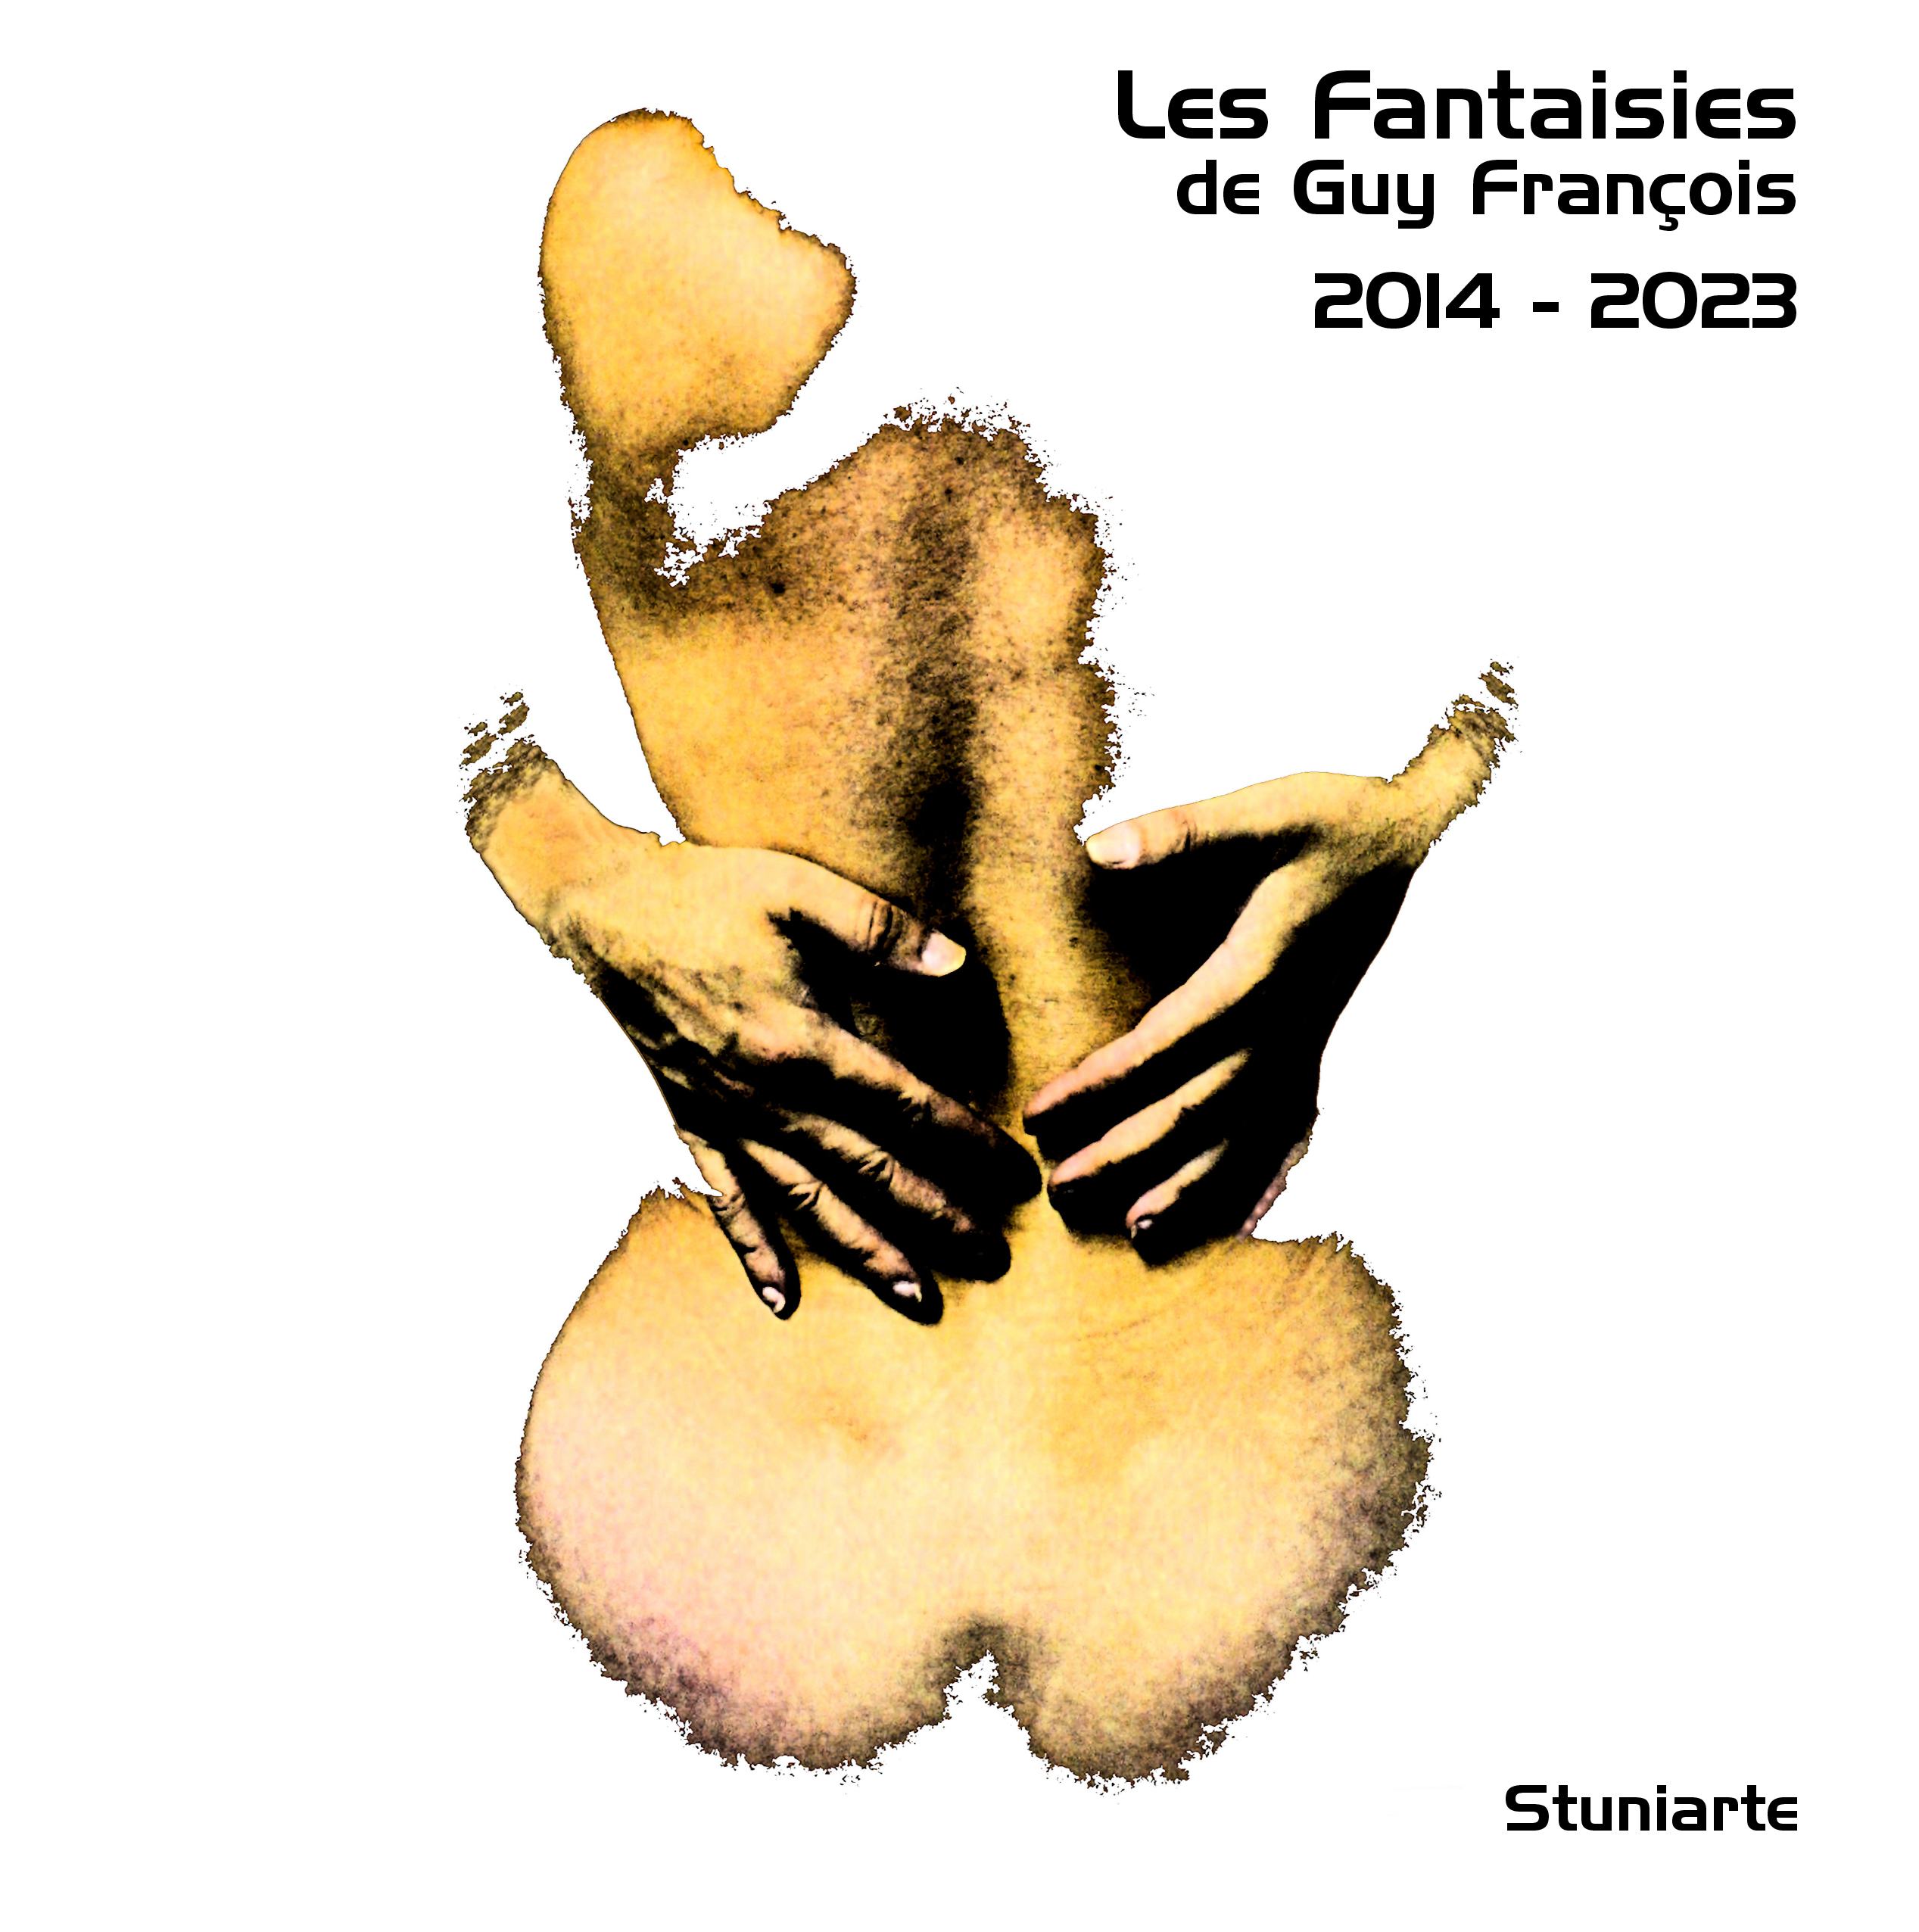 Les Fantaisies 2014 - 2023